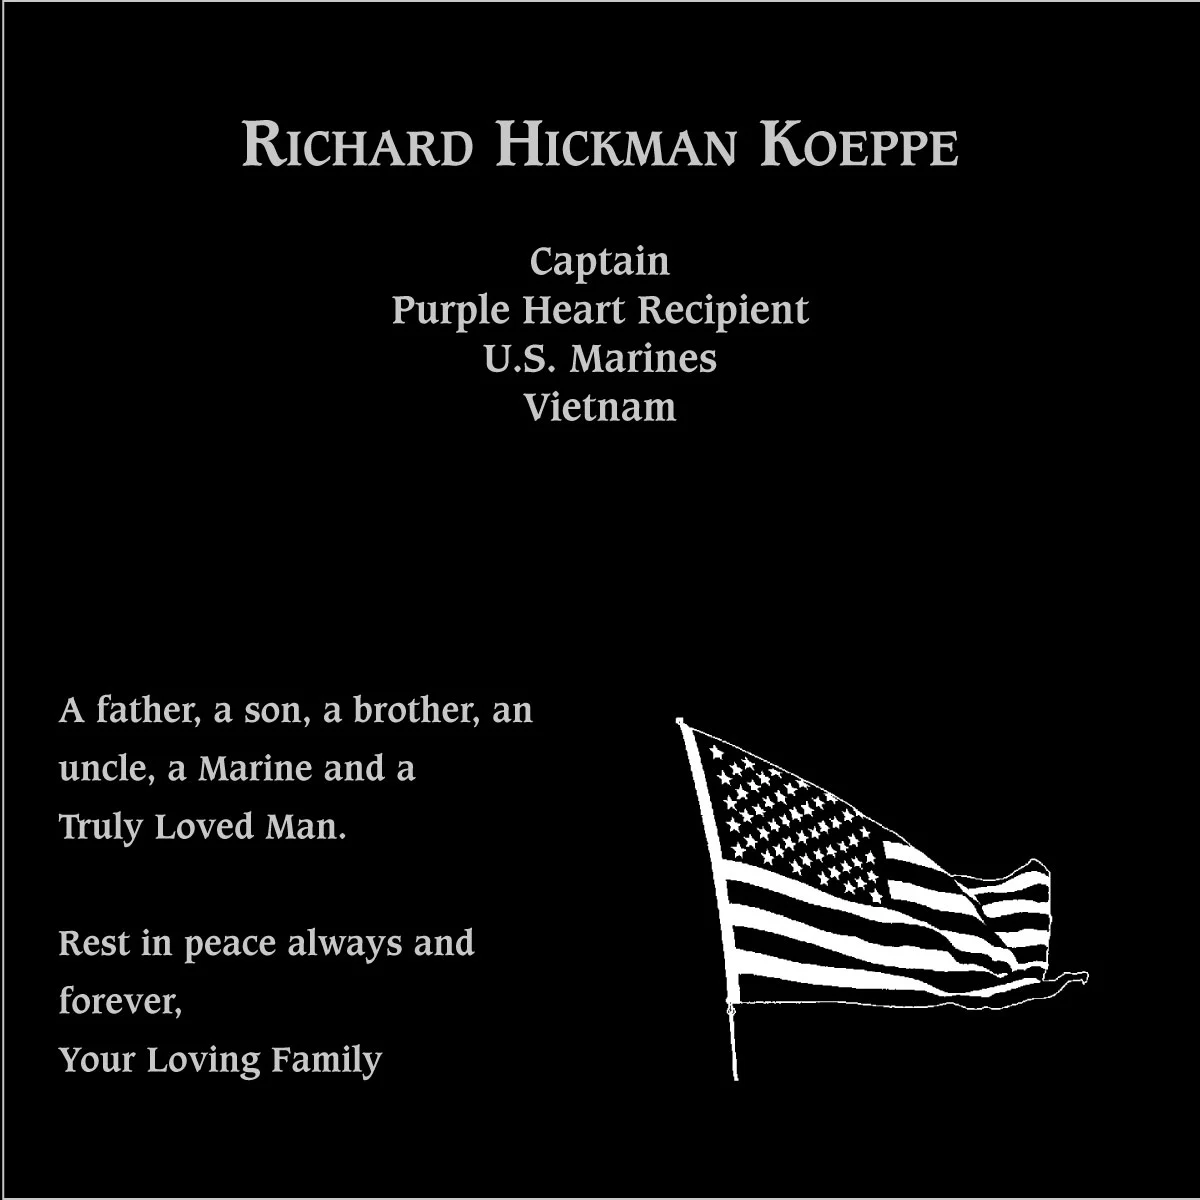 Richard Hickman Koeppe